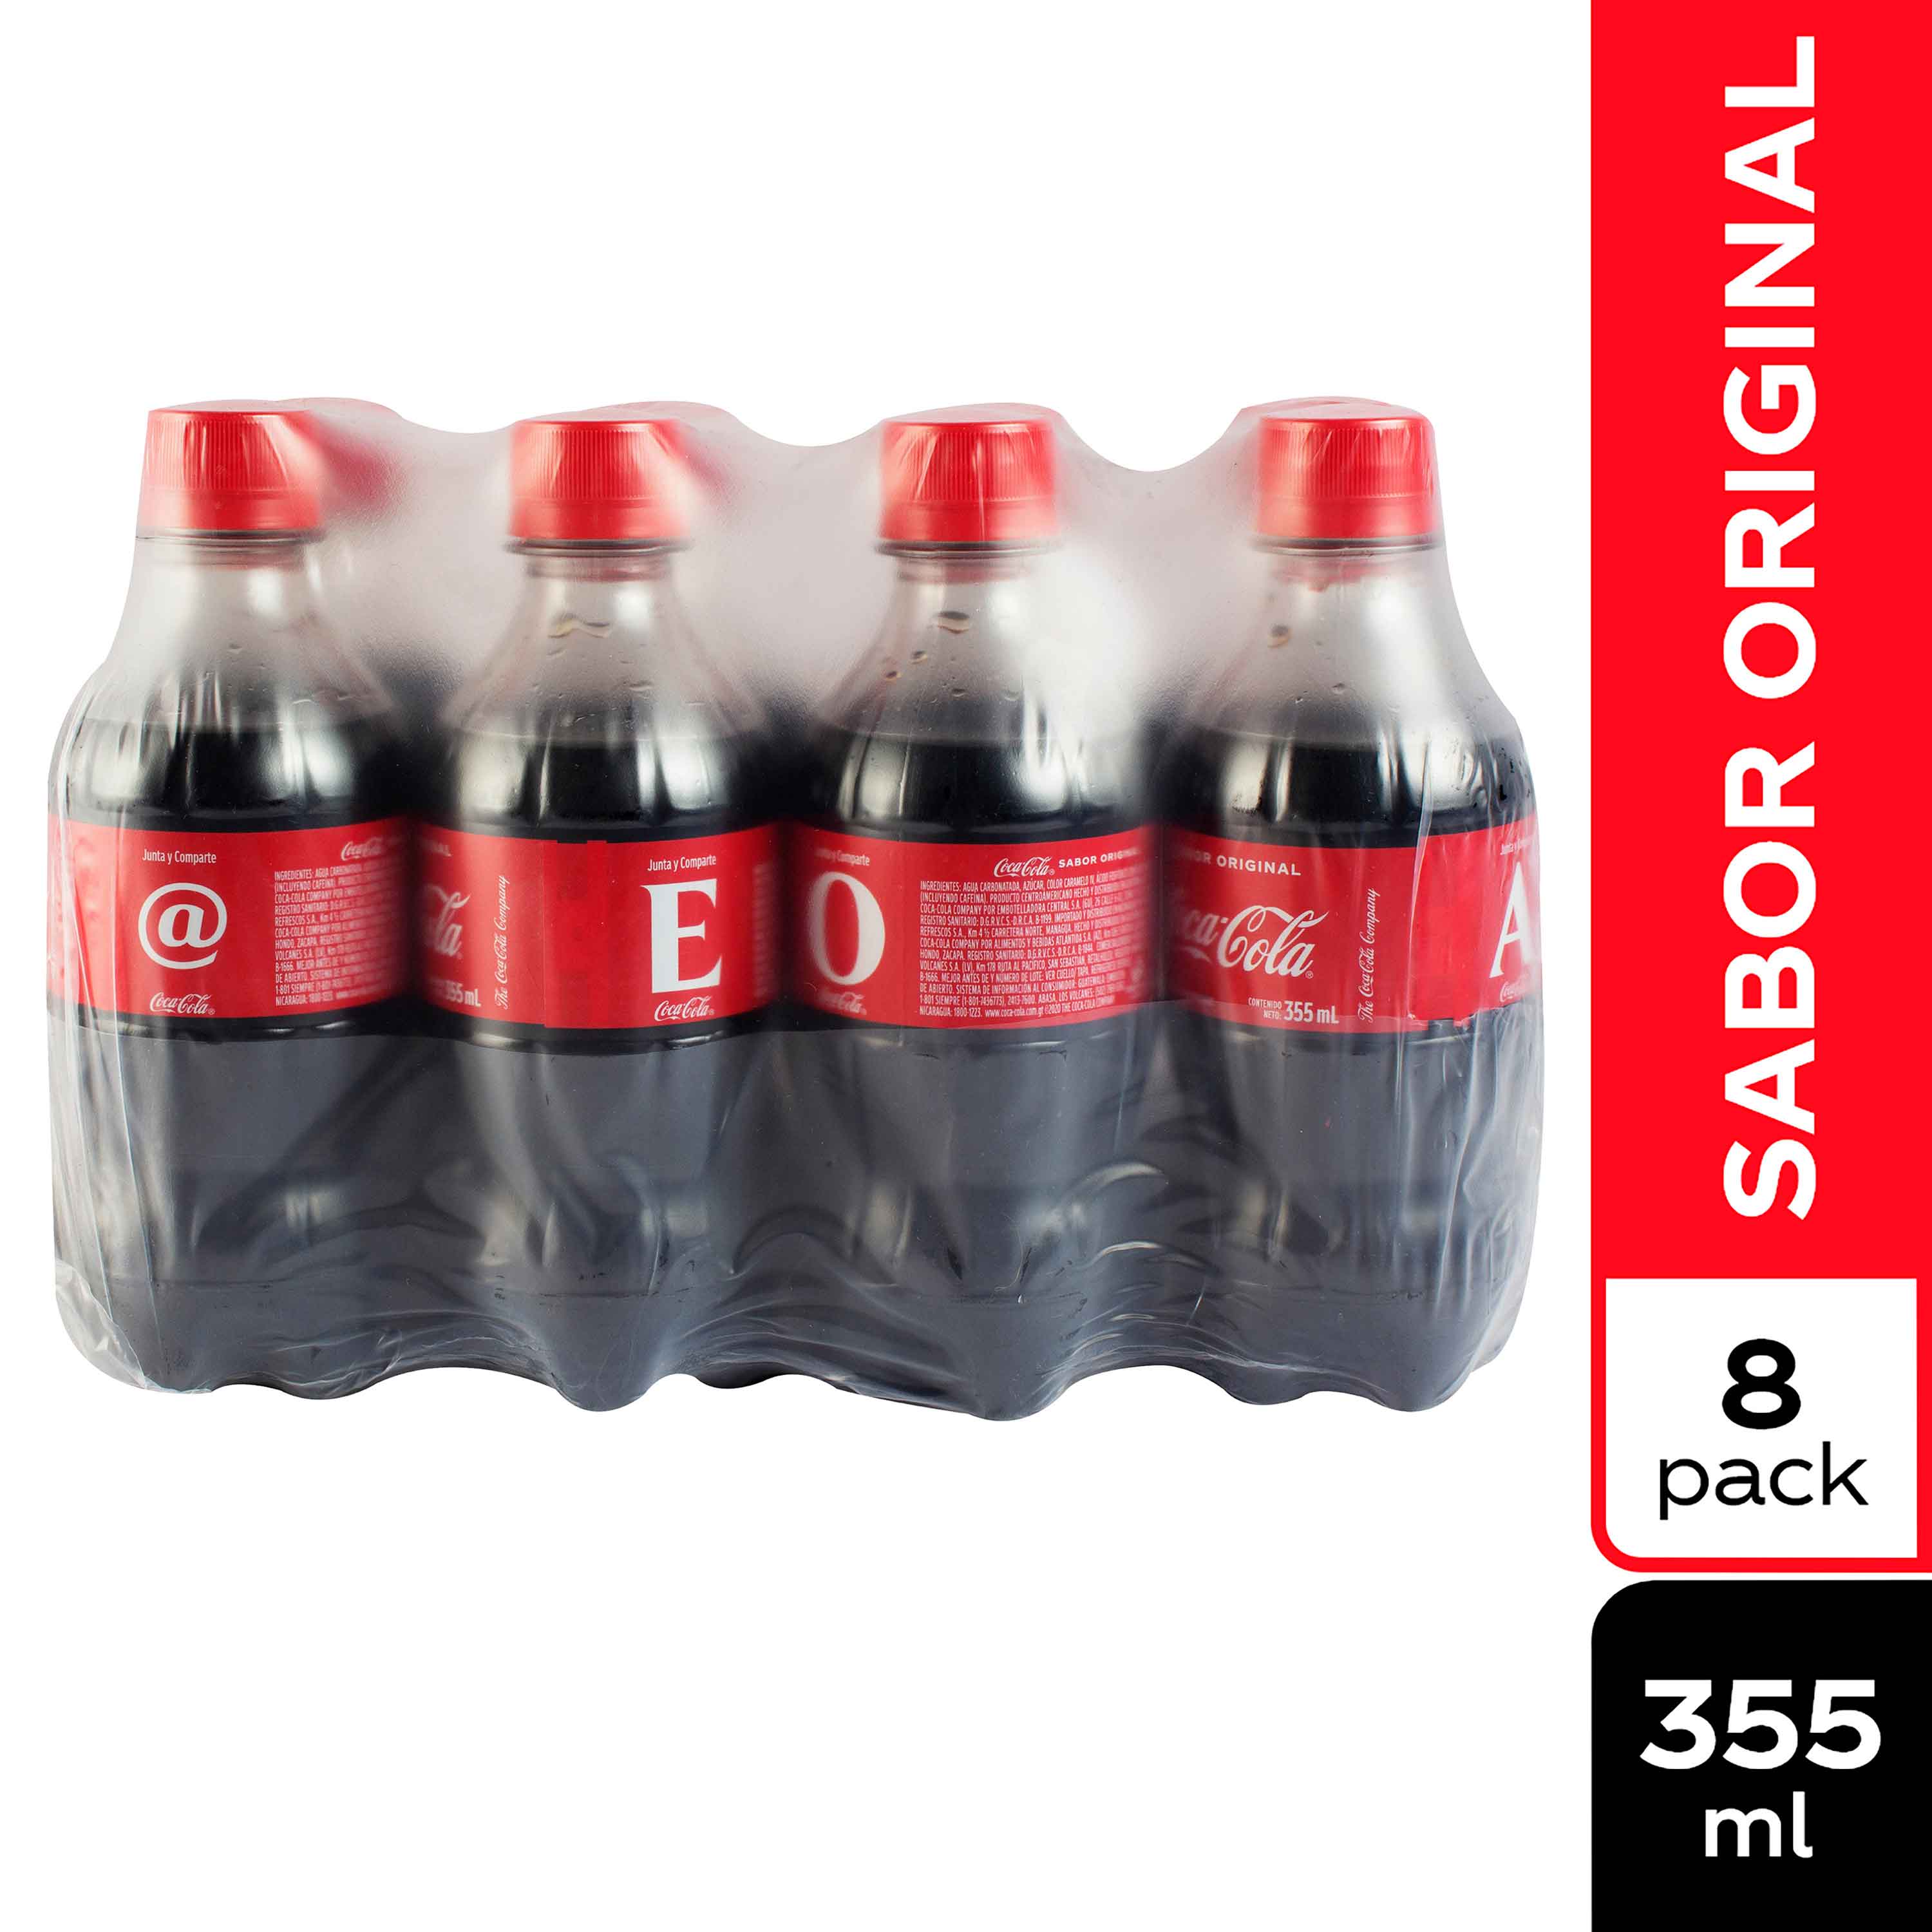 Gaseosa-Coca-Cola-regular-8pack-355ml-1-27616